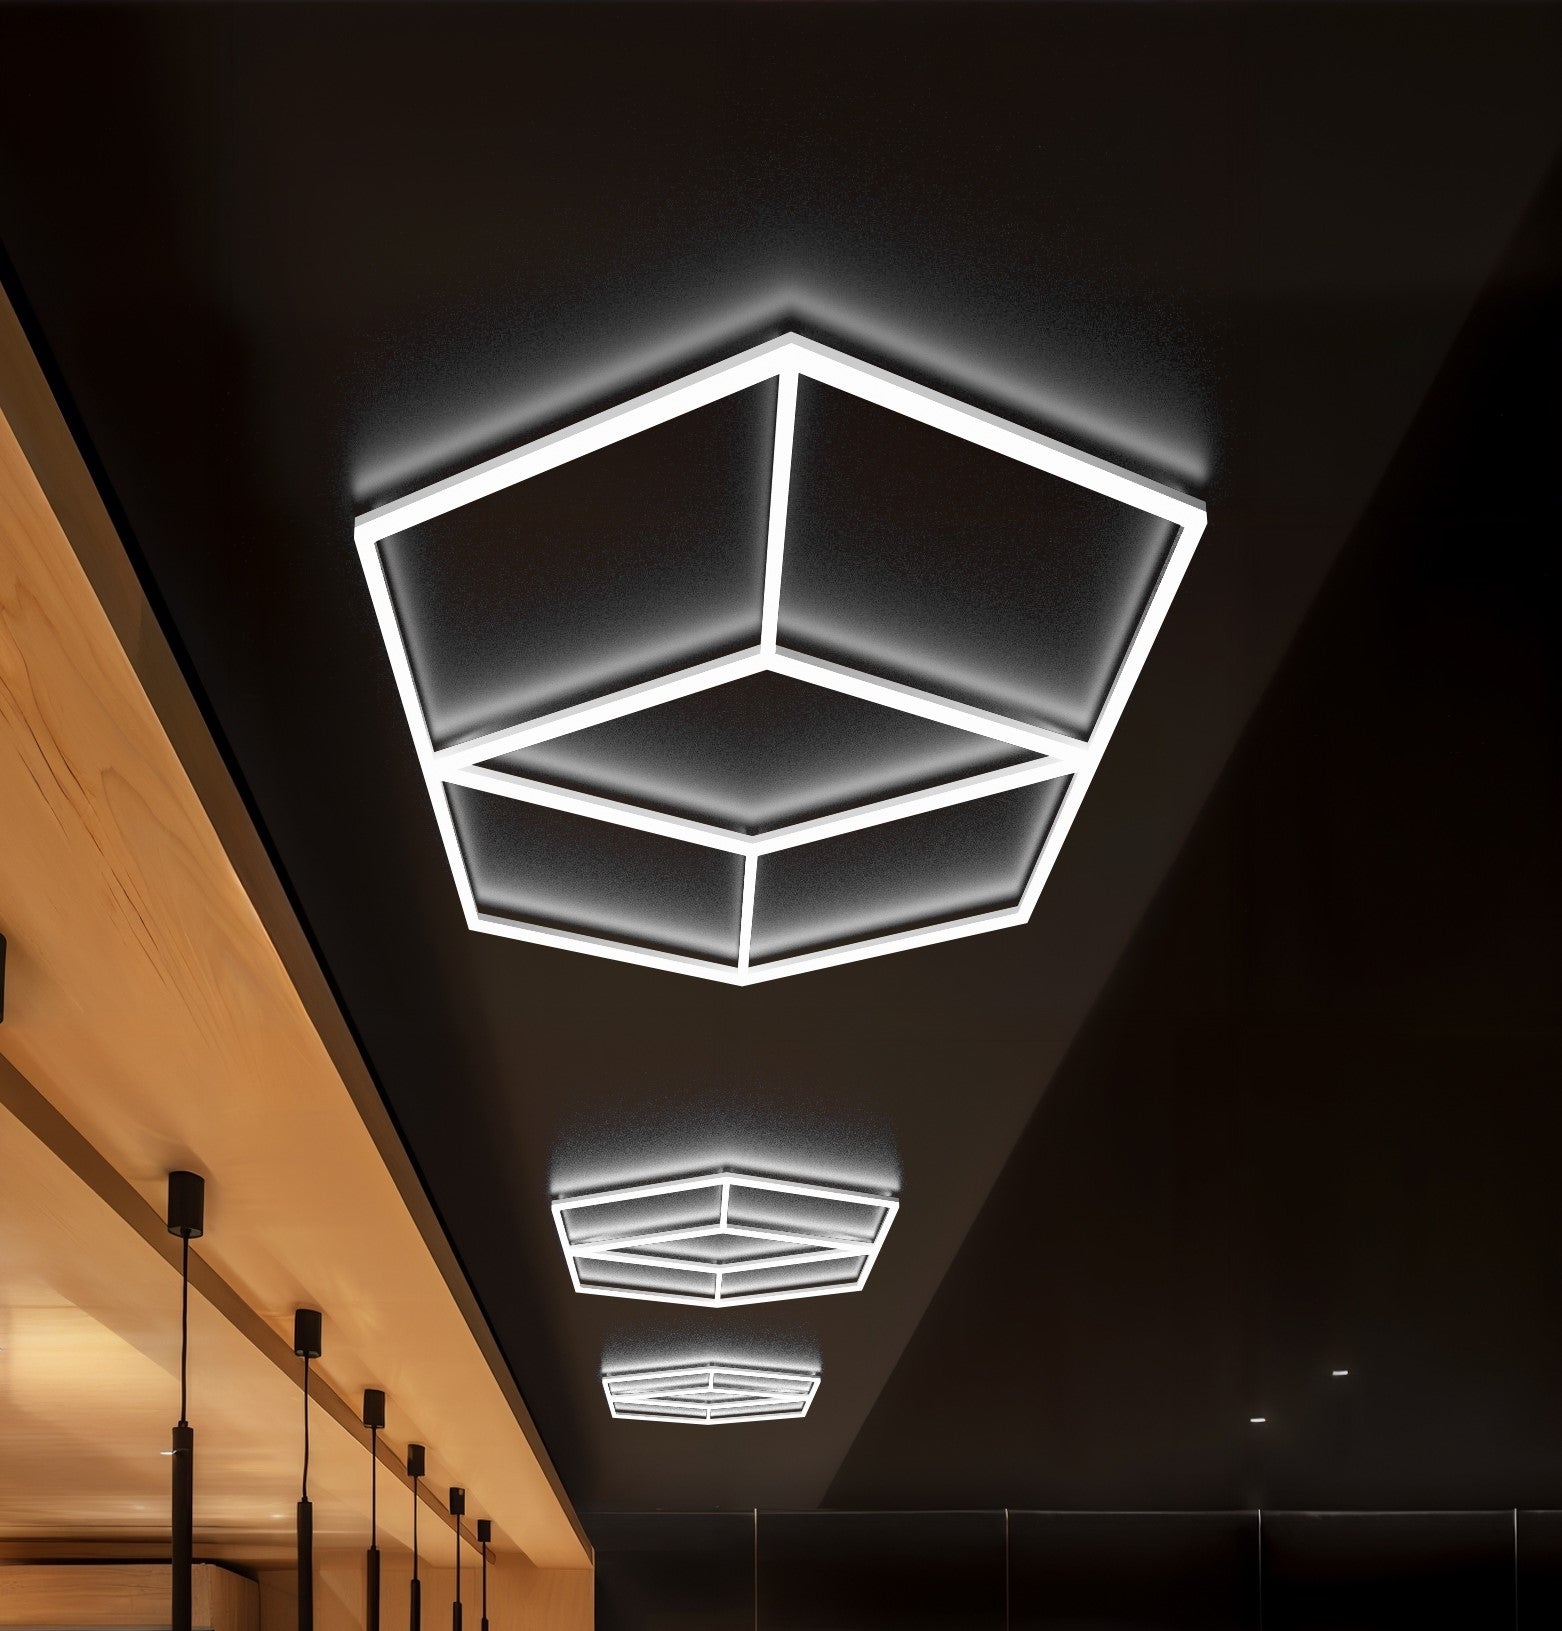 LED aydınlatma sistemi Brilium 1.41m x 2.42m